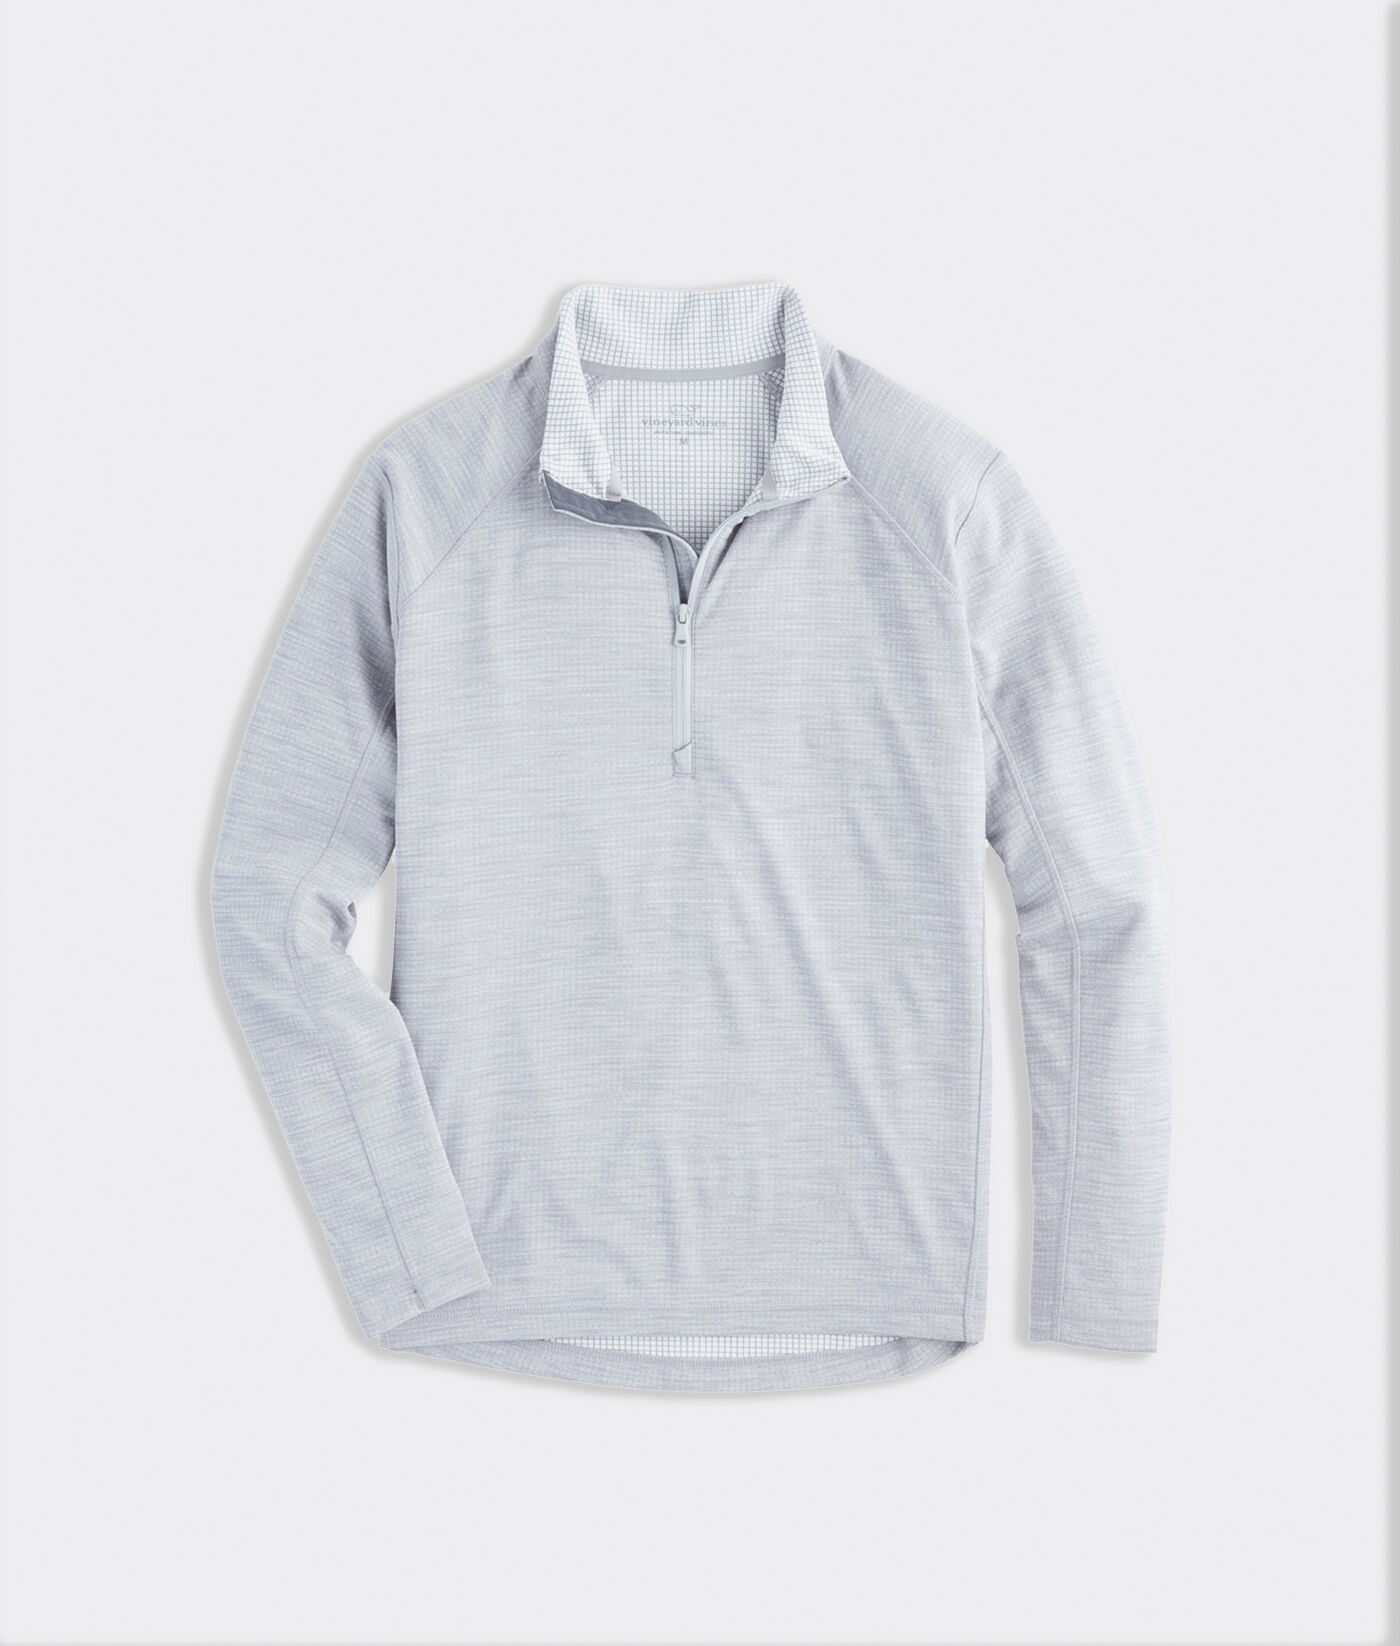 Vineyard Vines Men's Shep Shirt in Grey Barracuda $125.00 Small S 